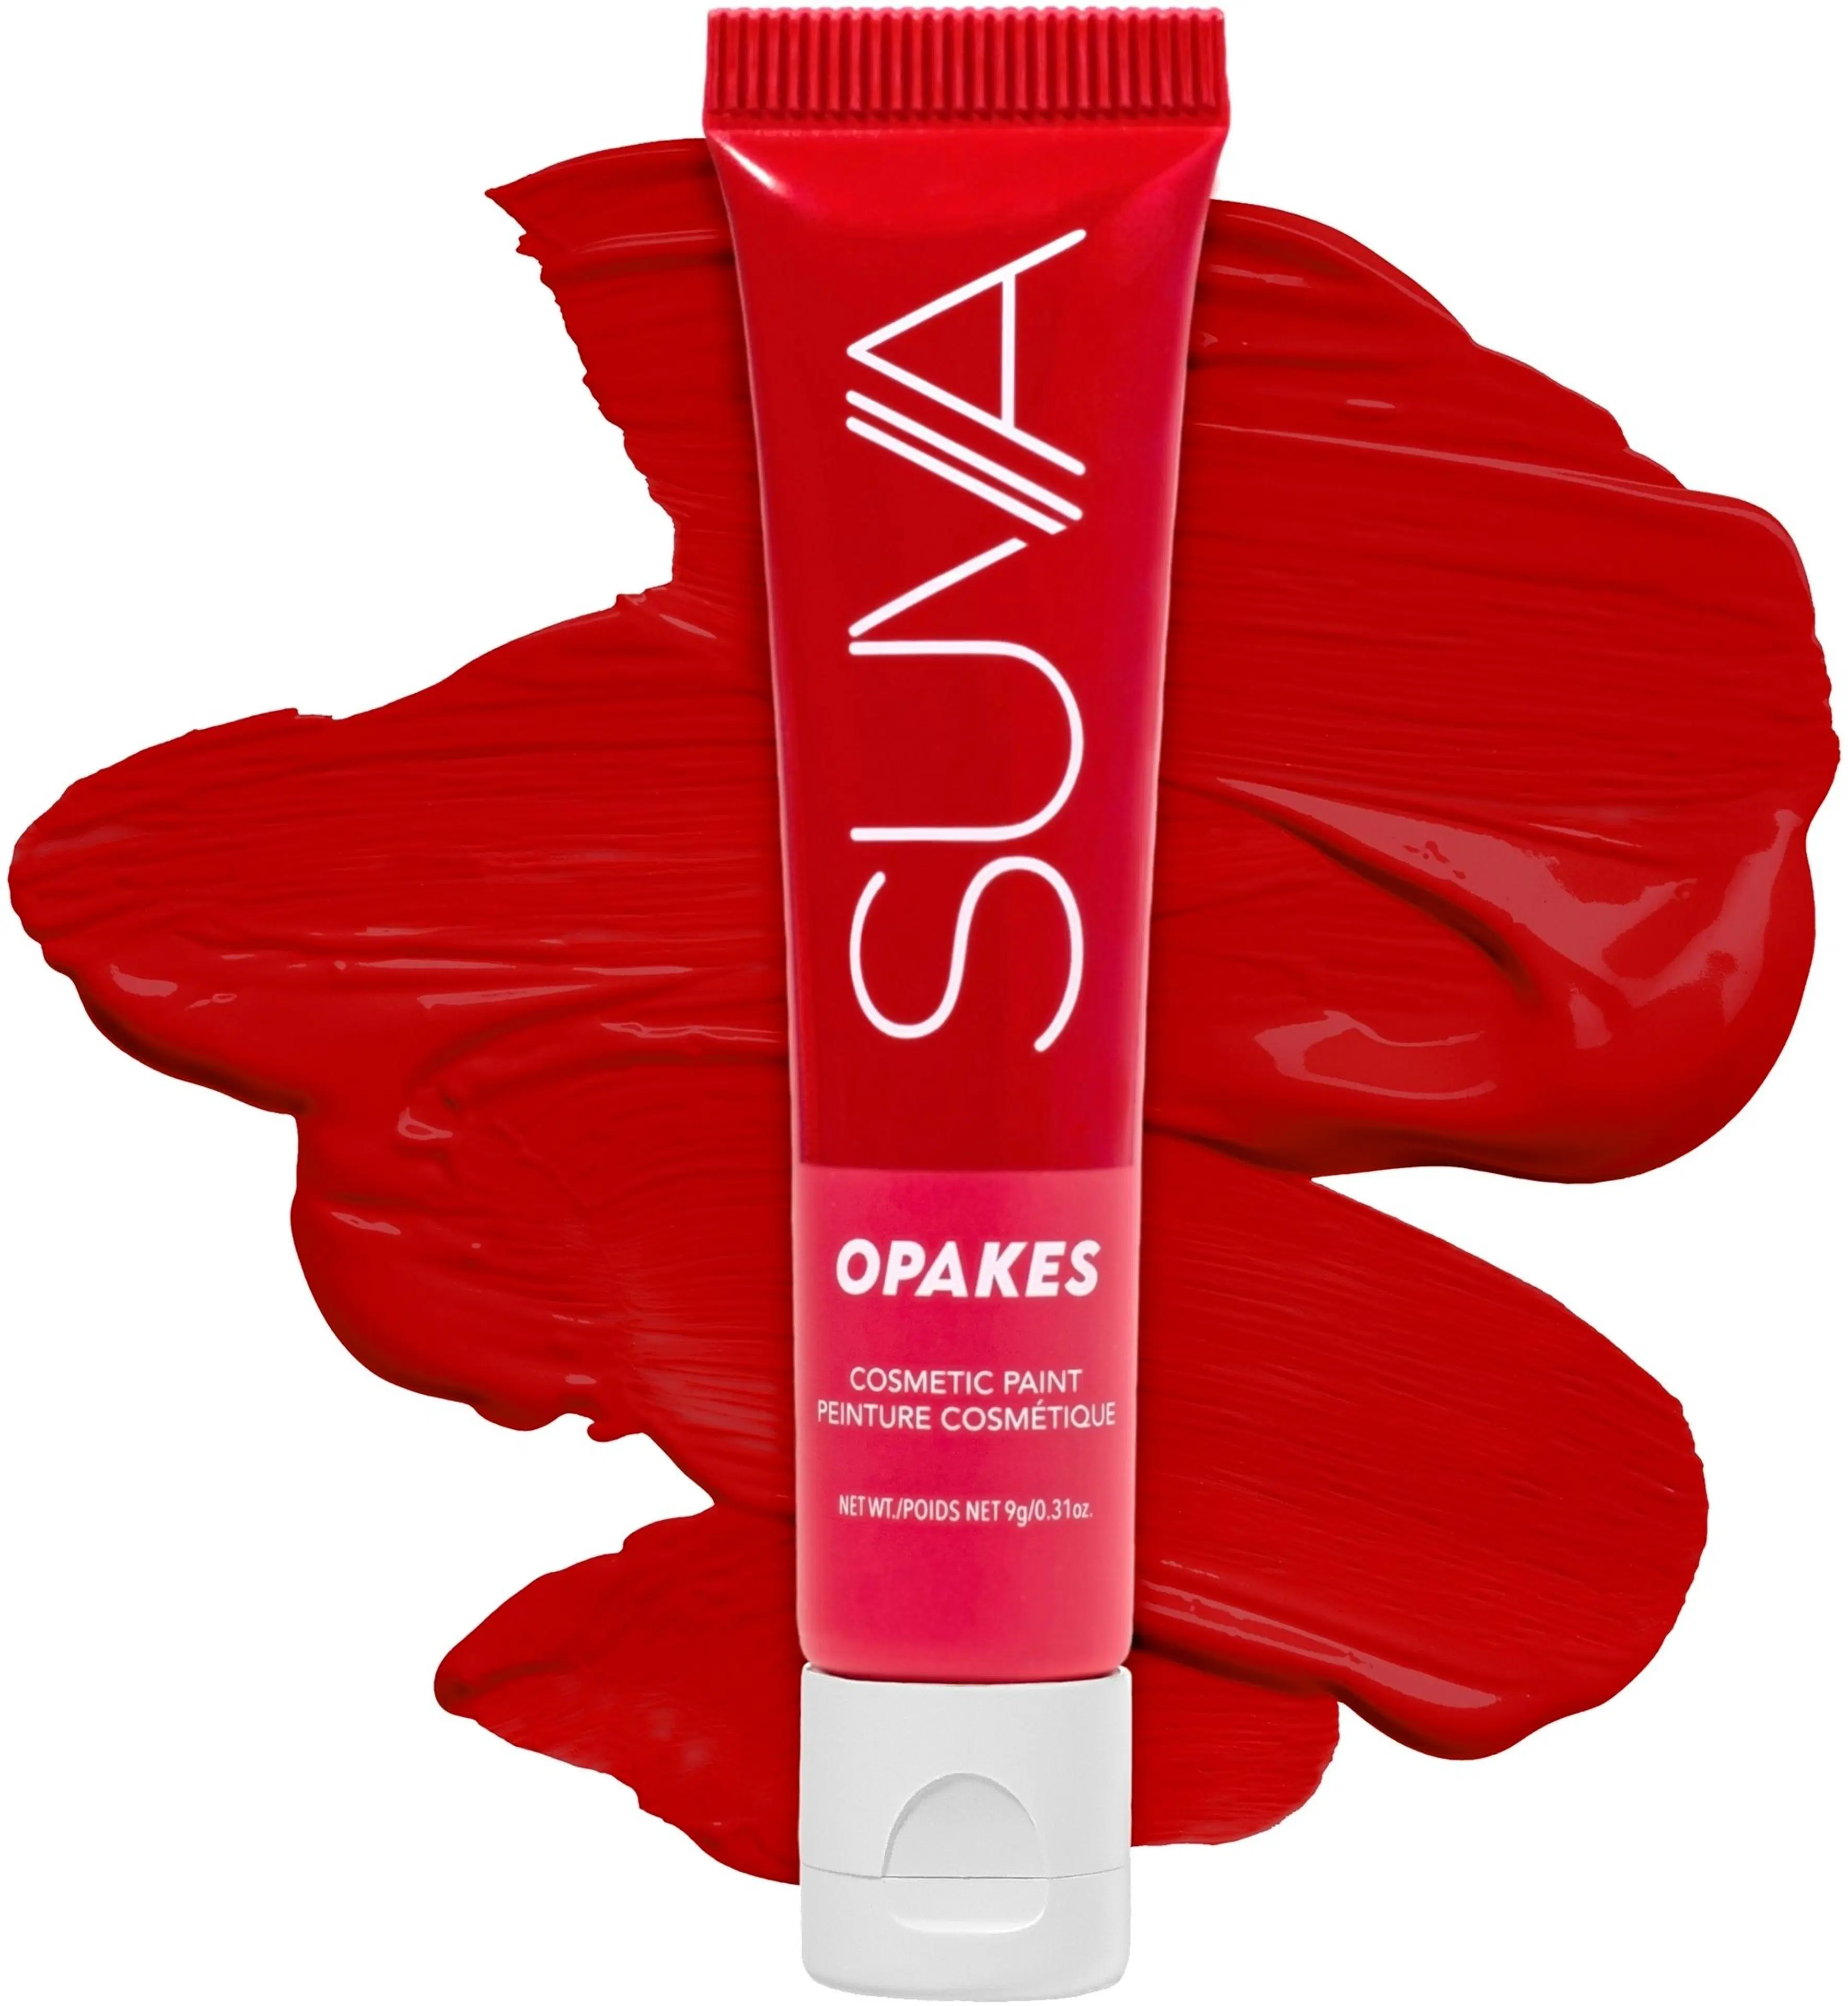 SUVA Beauty Opakes Cosmetic Paint Ragamuffin Red väri 9g